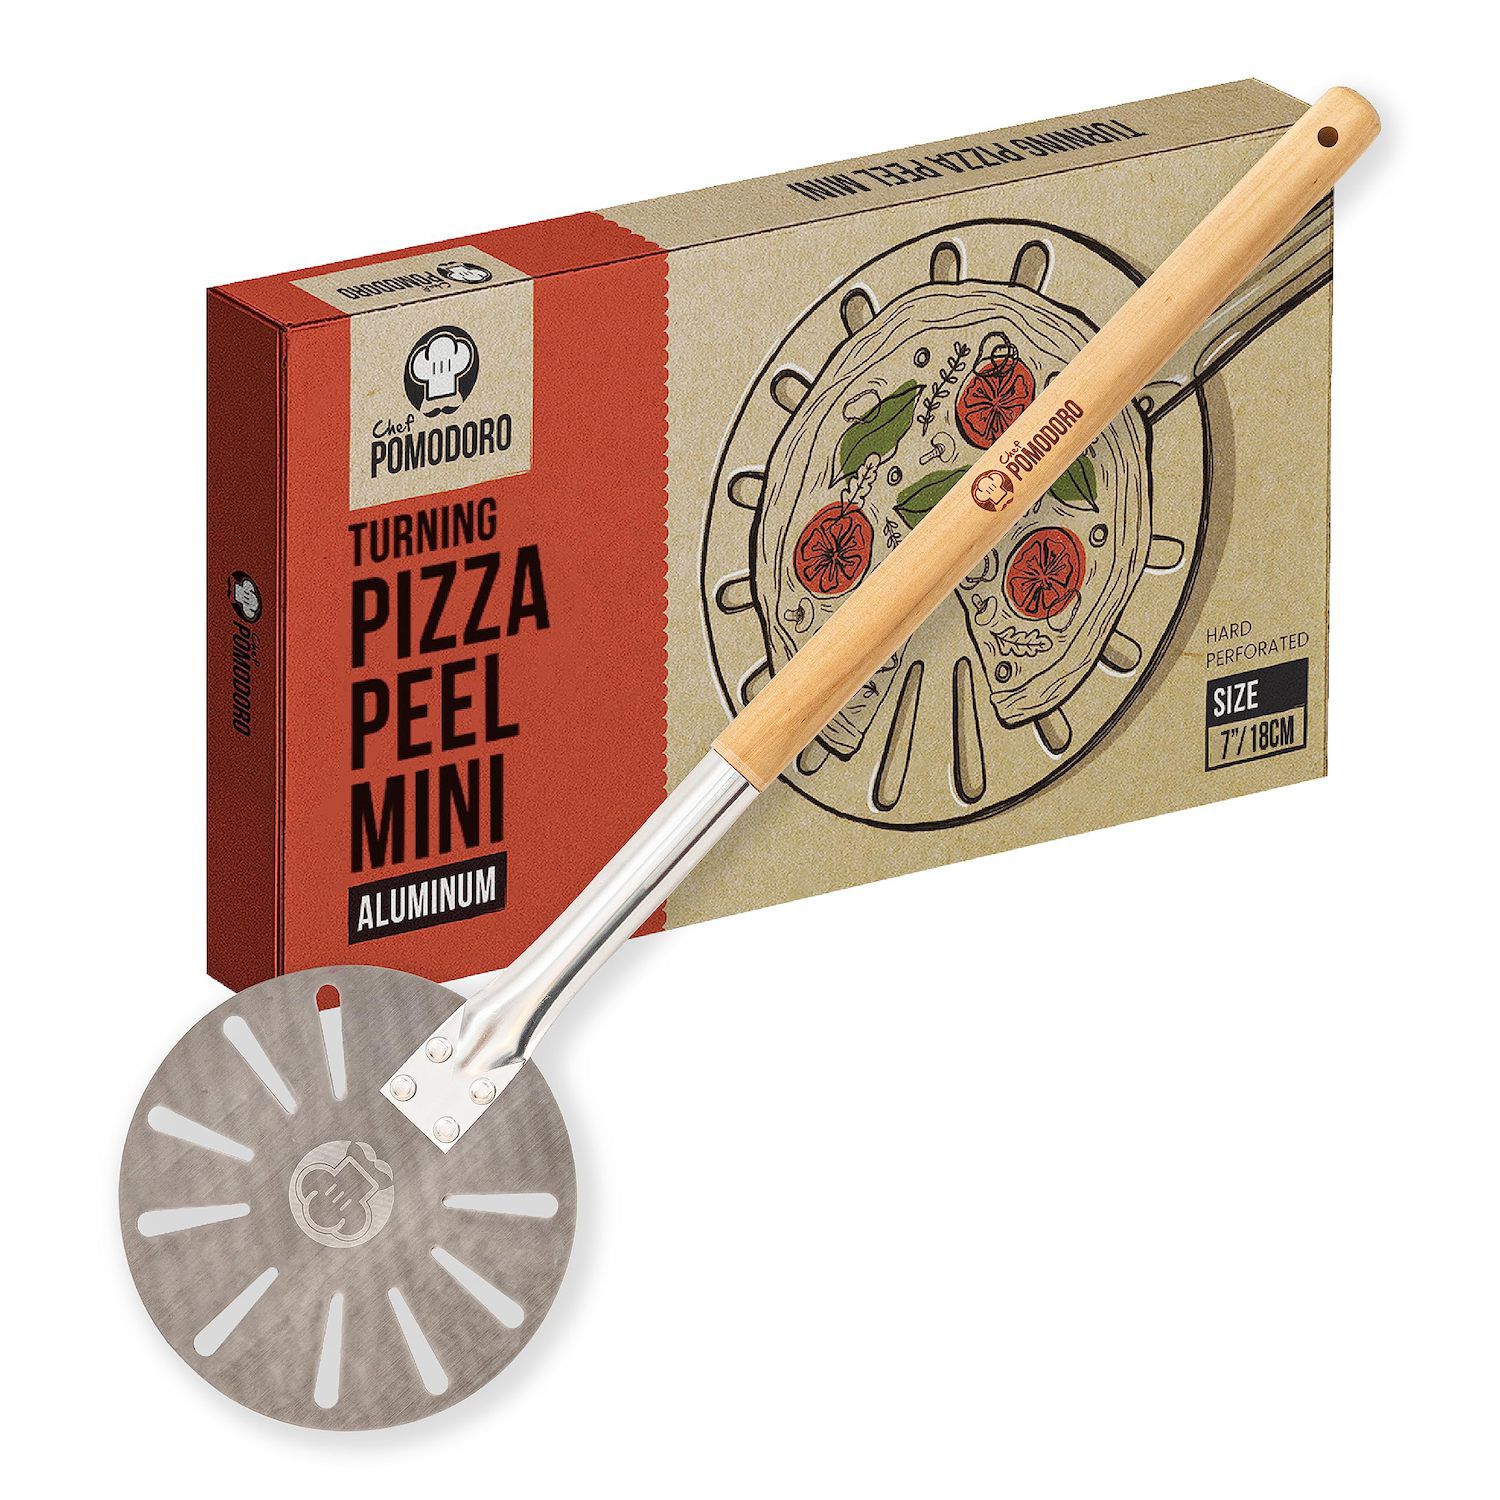 Chef Pomodoro Chicago Deep Dish Pizza Pan 12 Inch, Hard Anodized Aluminum  Pizza Pan for Oven, Pre-Seasoned Bakeware Kitchenware, Non-Stick Round  Pizza